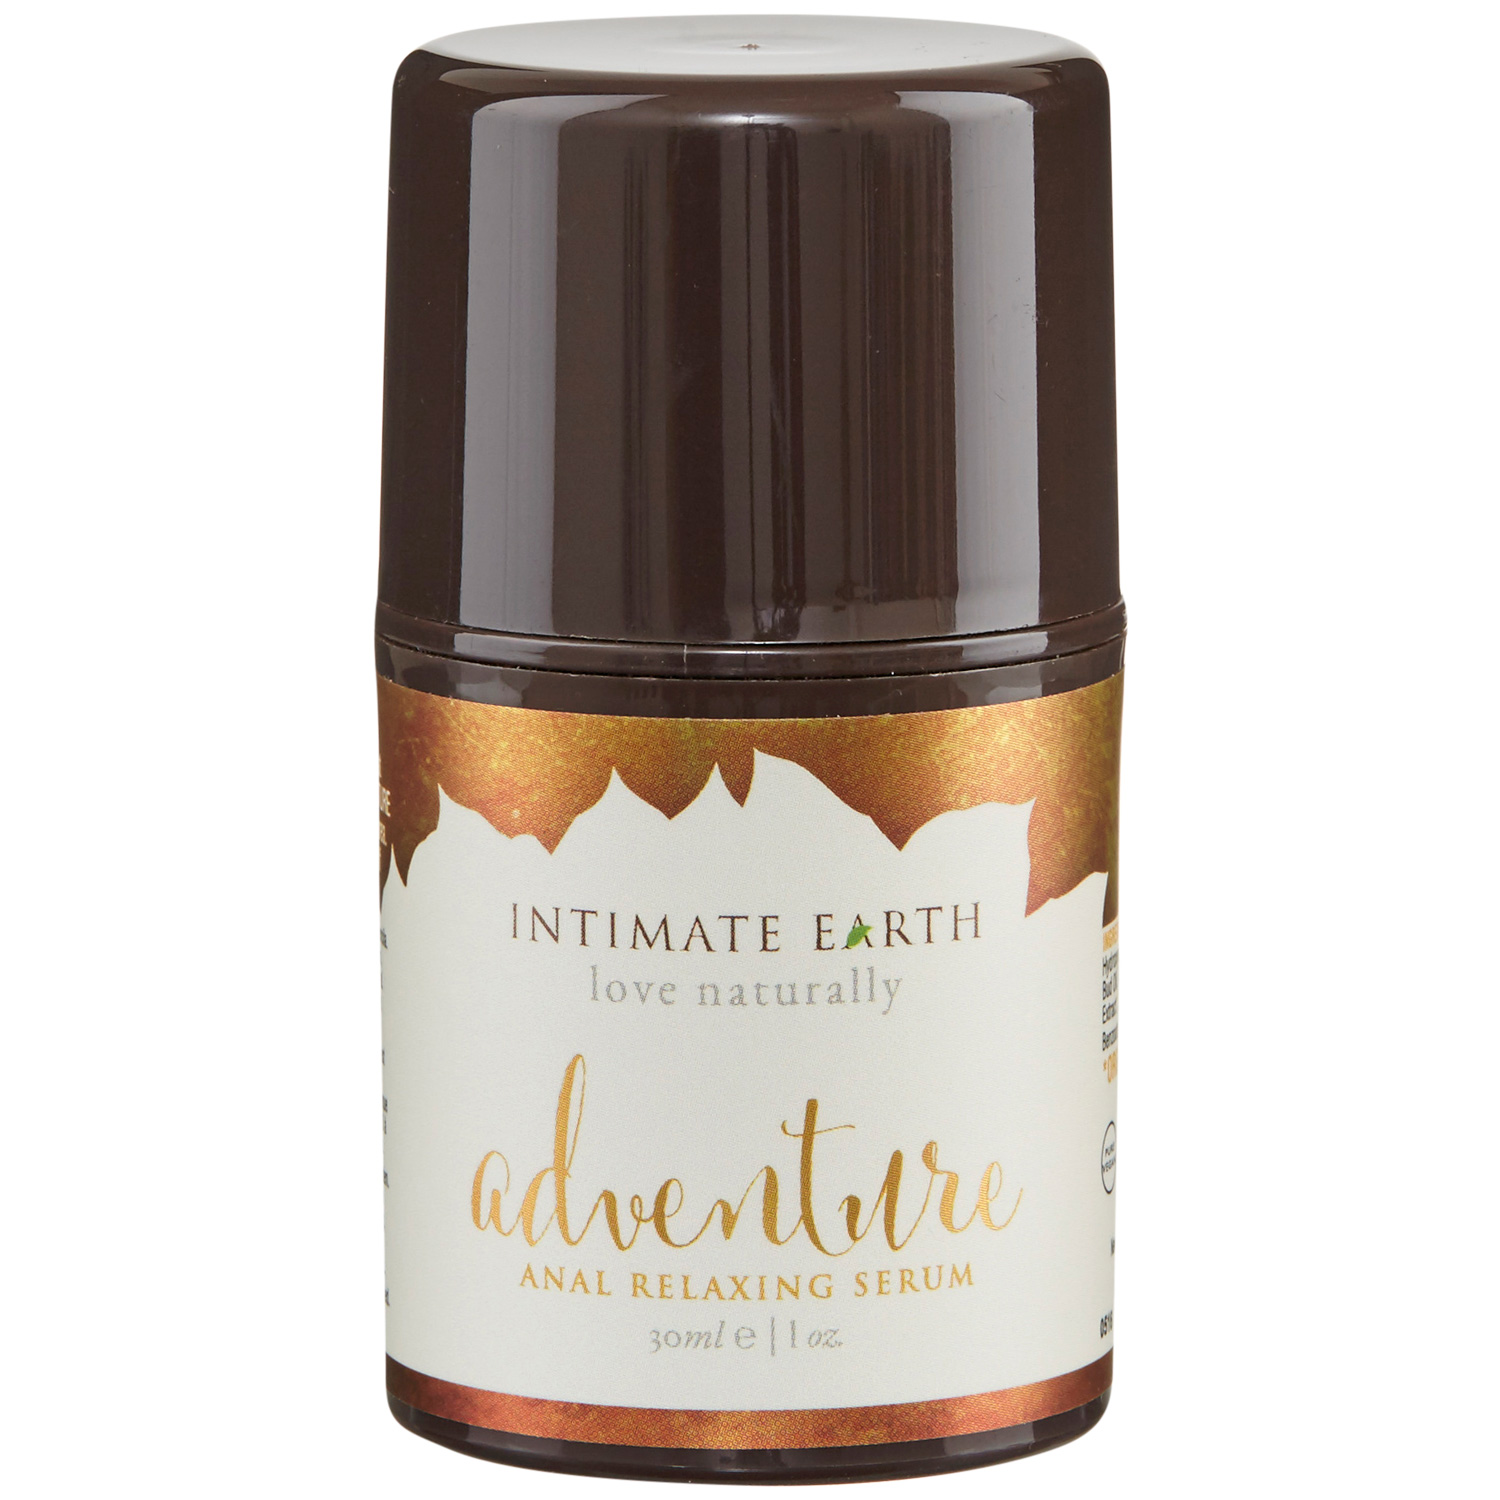 Intimate Earth Intimate Earth Adventure Anal Relaxing Serum 30 ml - Klar